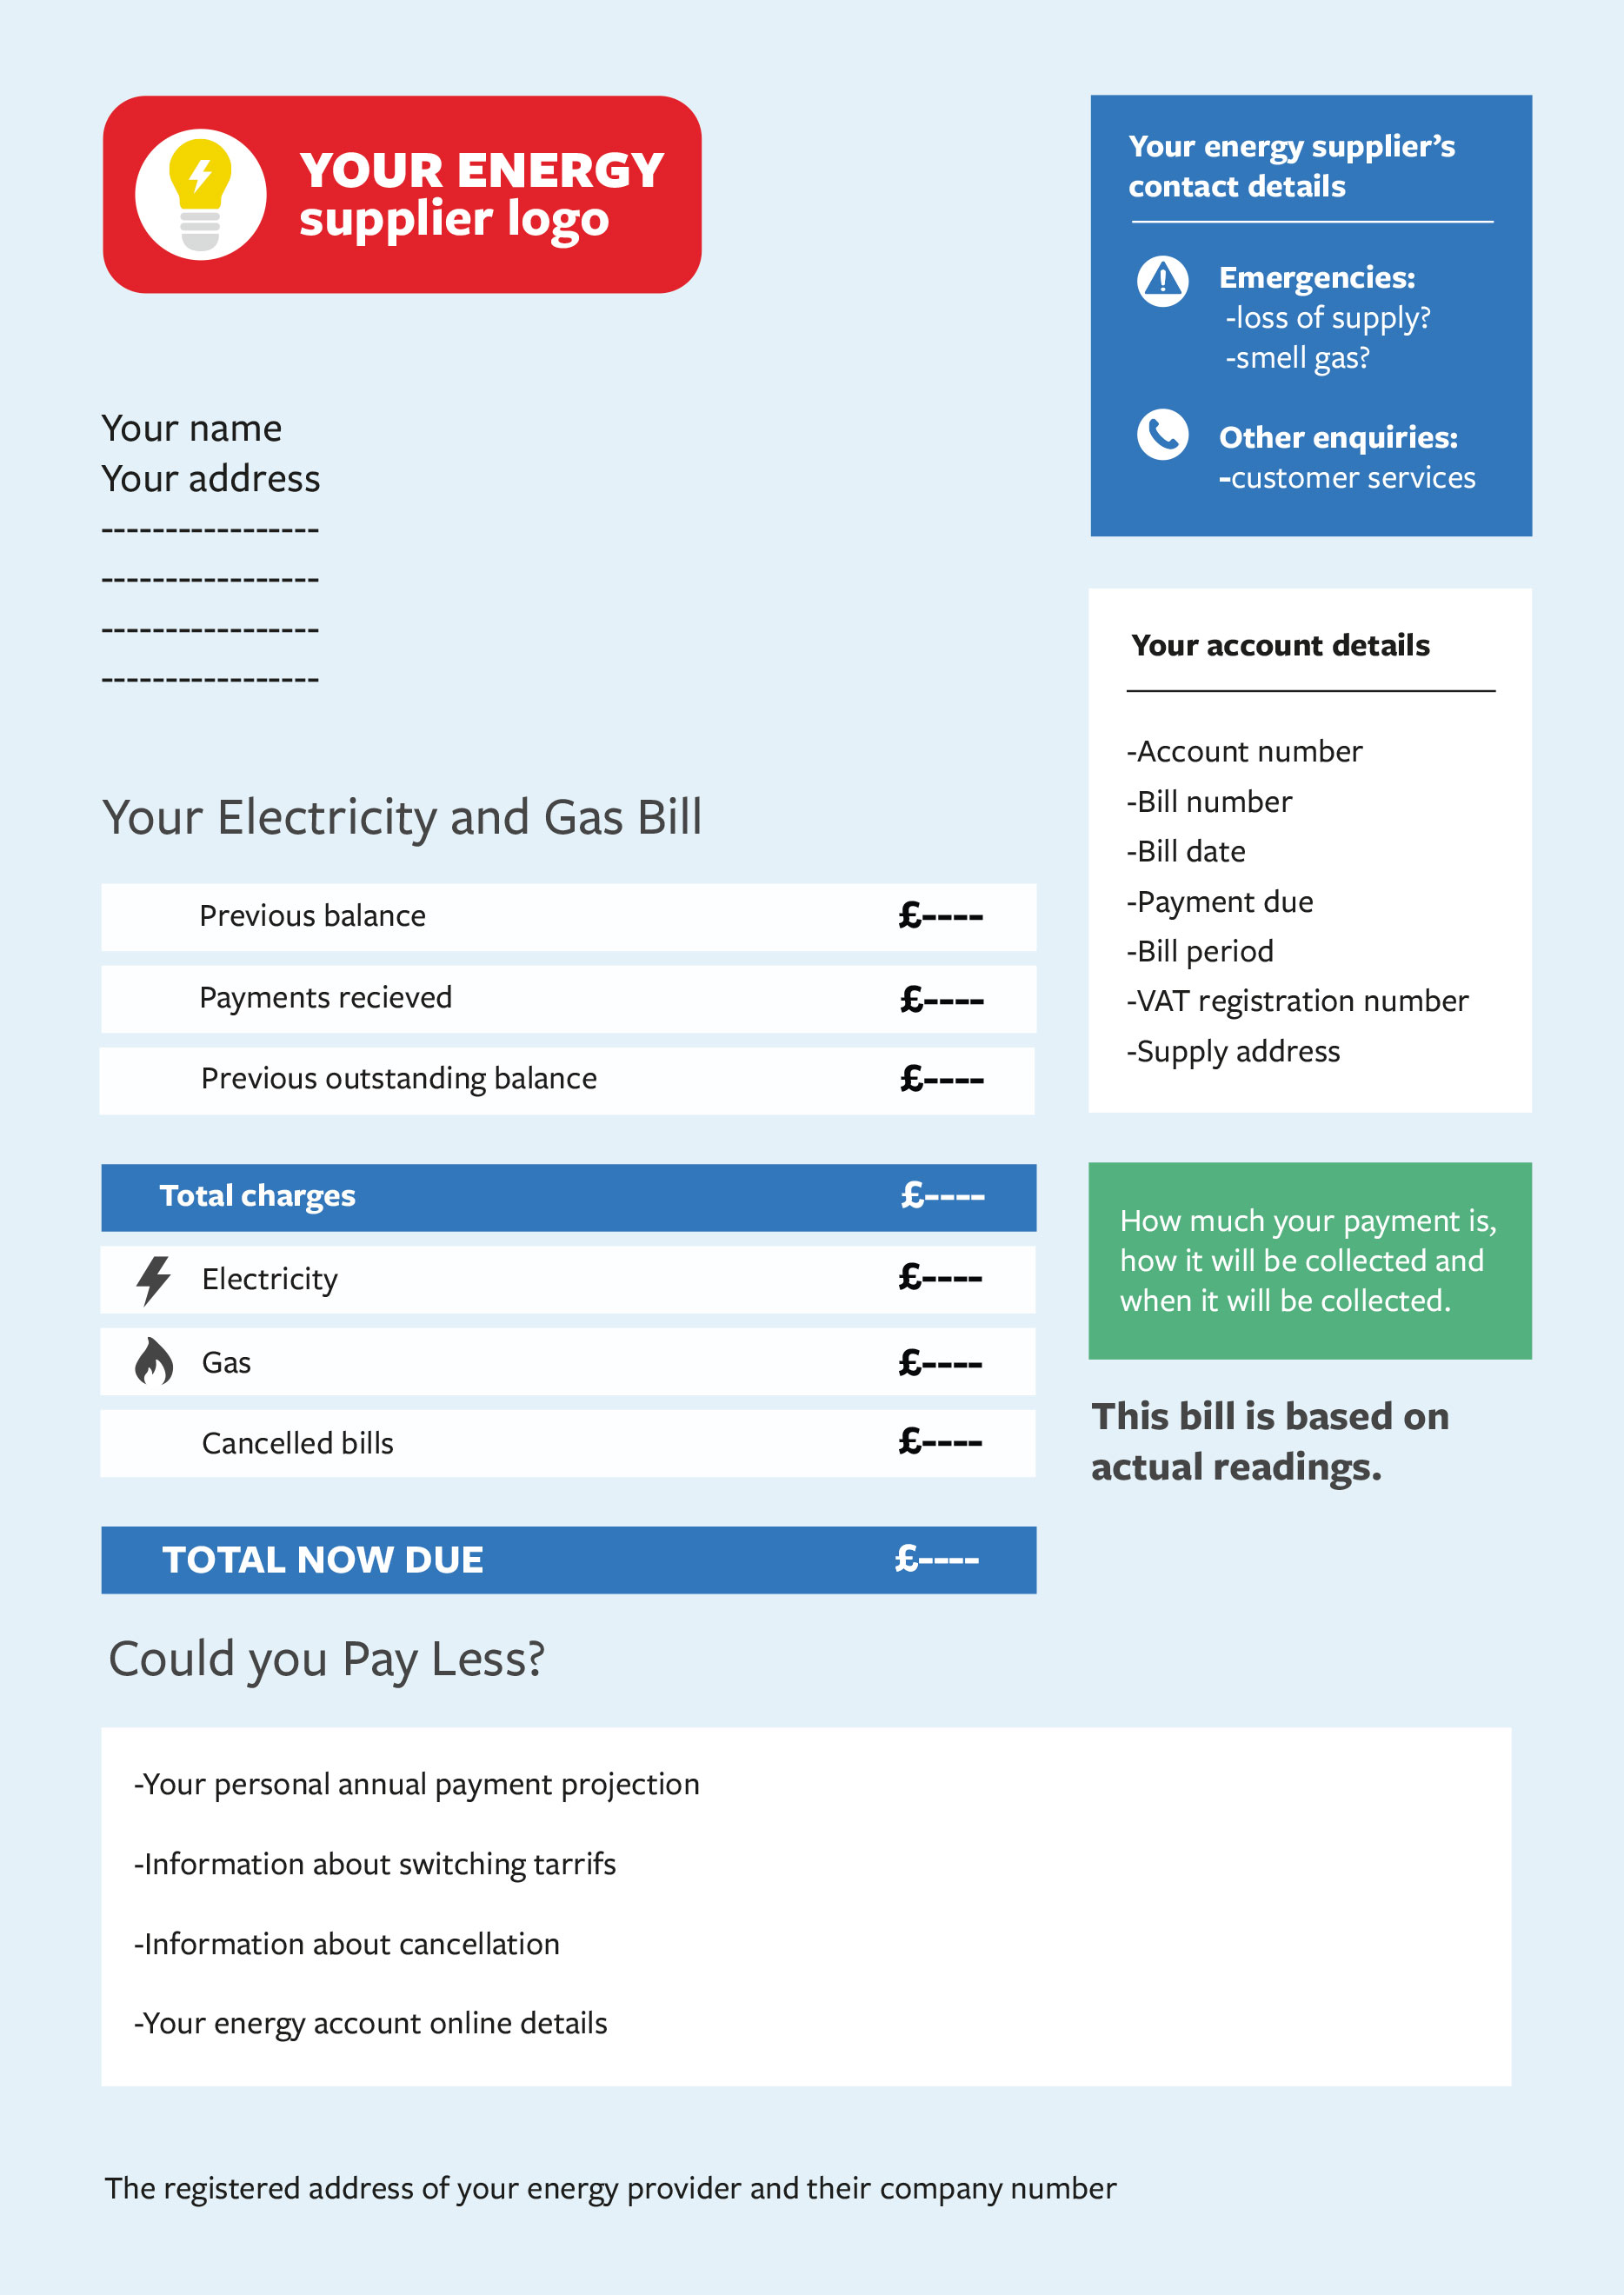 An example of an energy bill.